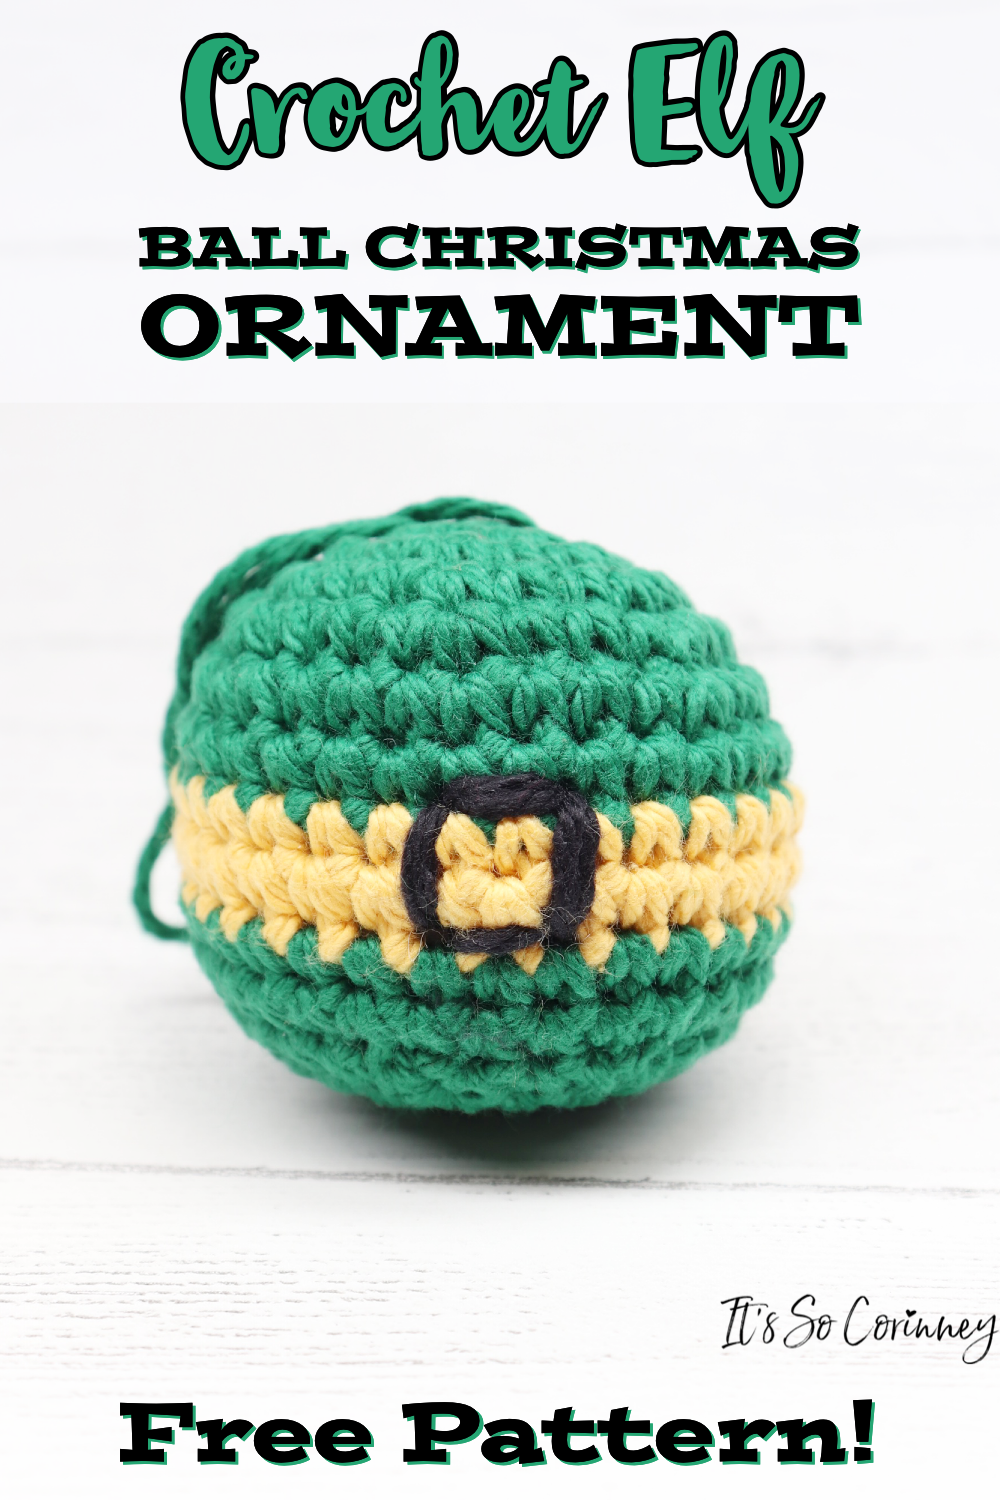 Crochet Elf Ball Christmas Ornament ~ It's So Corinney